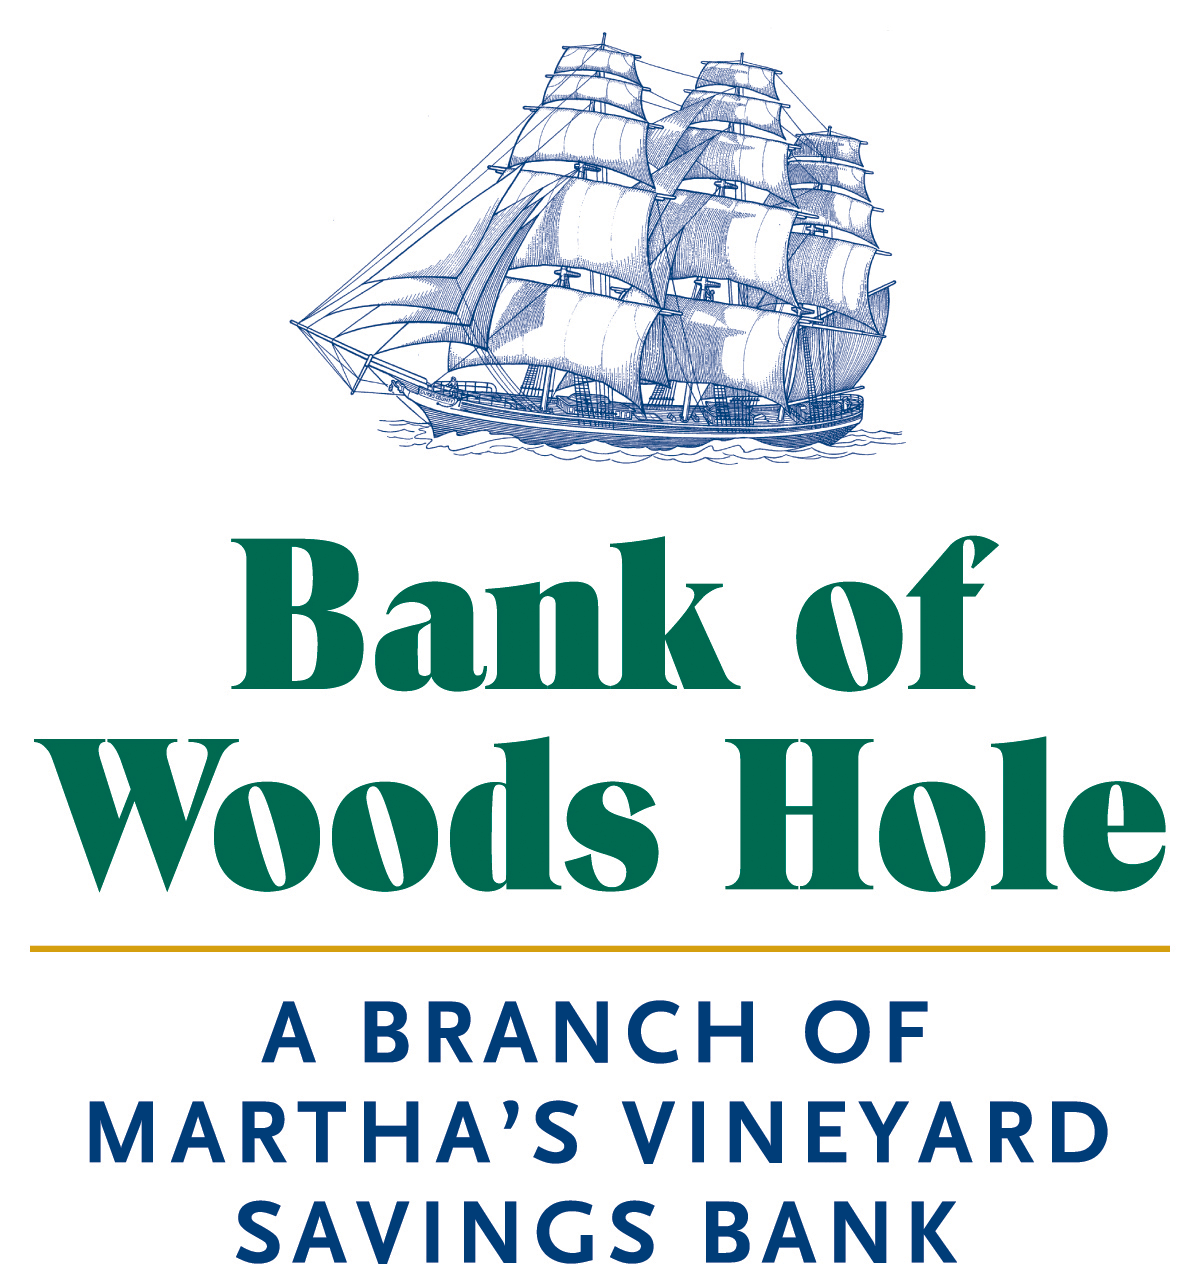 Martha's Vineyard Savings Bank